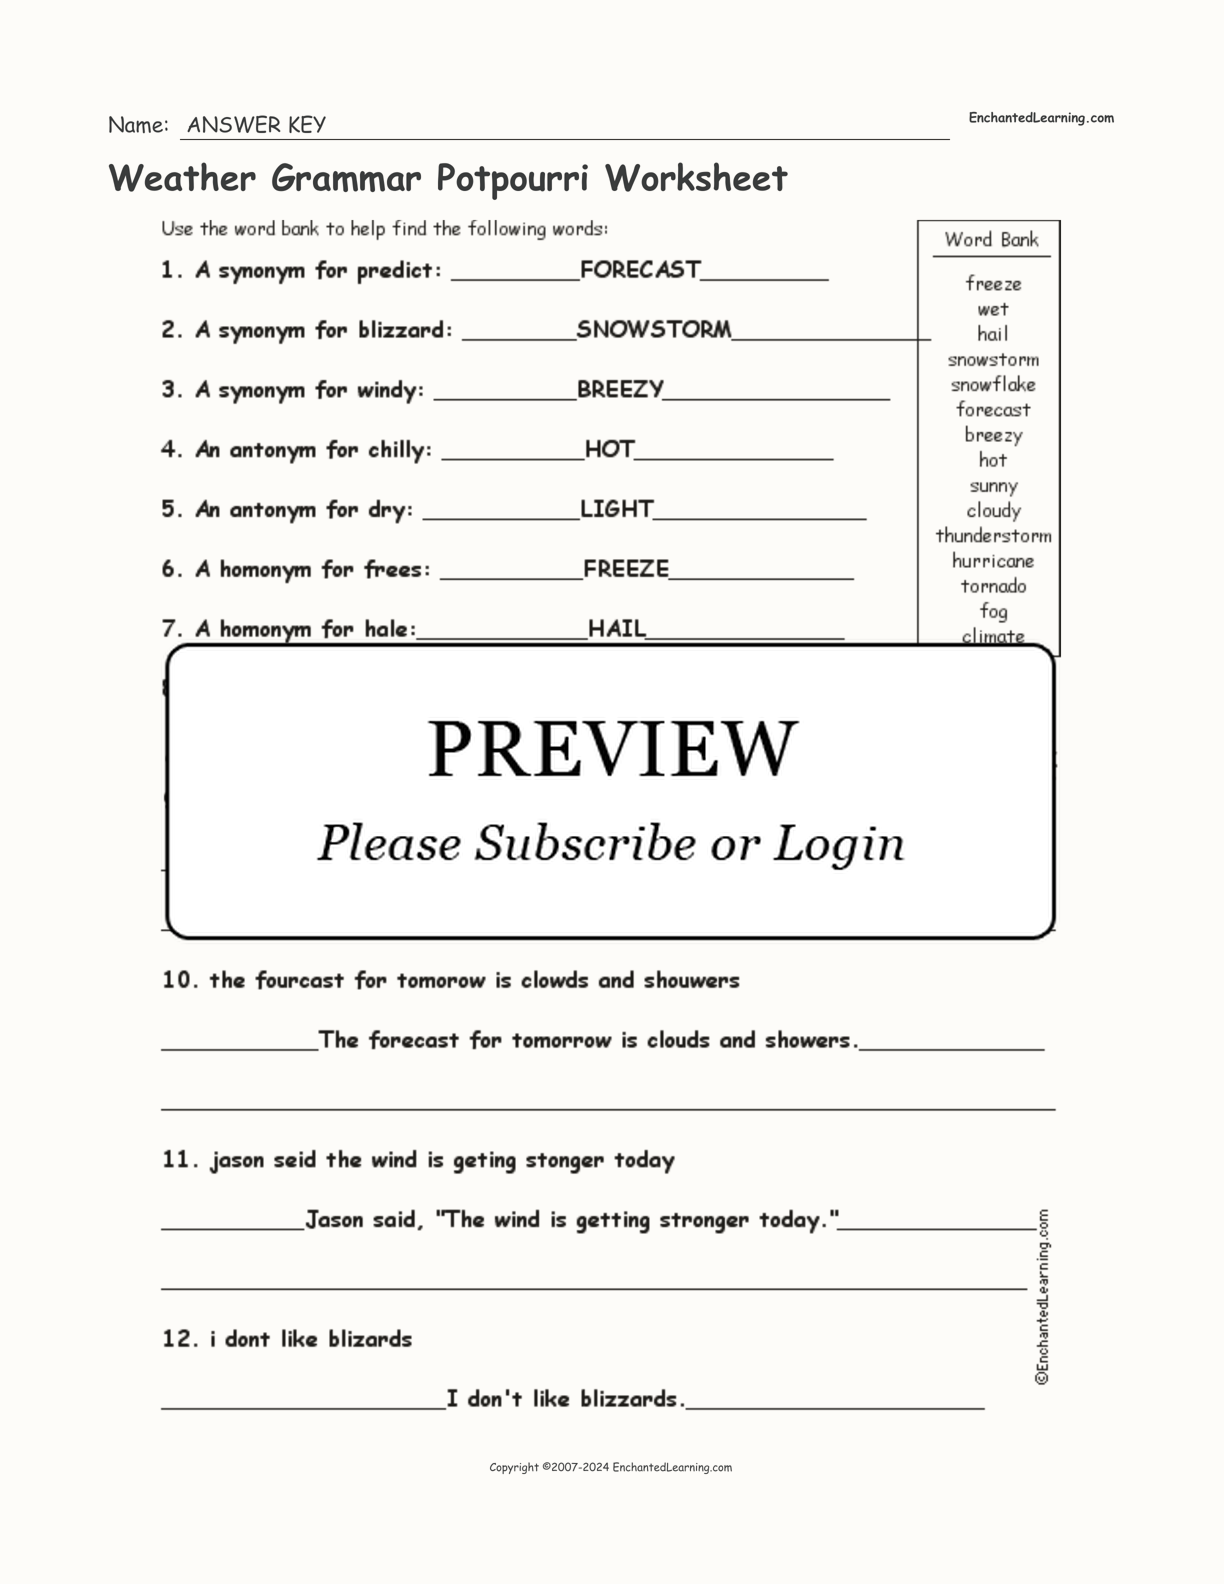 Weather Grammar Potpourri Worksheet interactive worksheet page 2